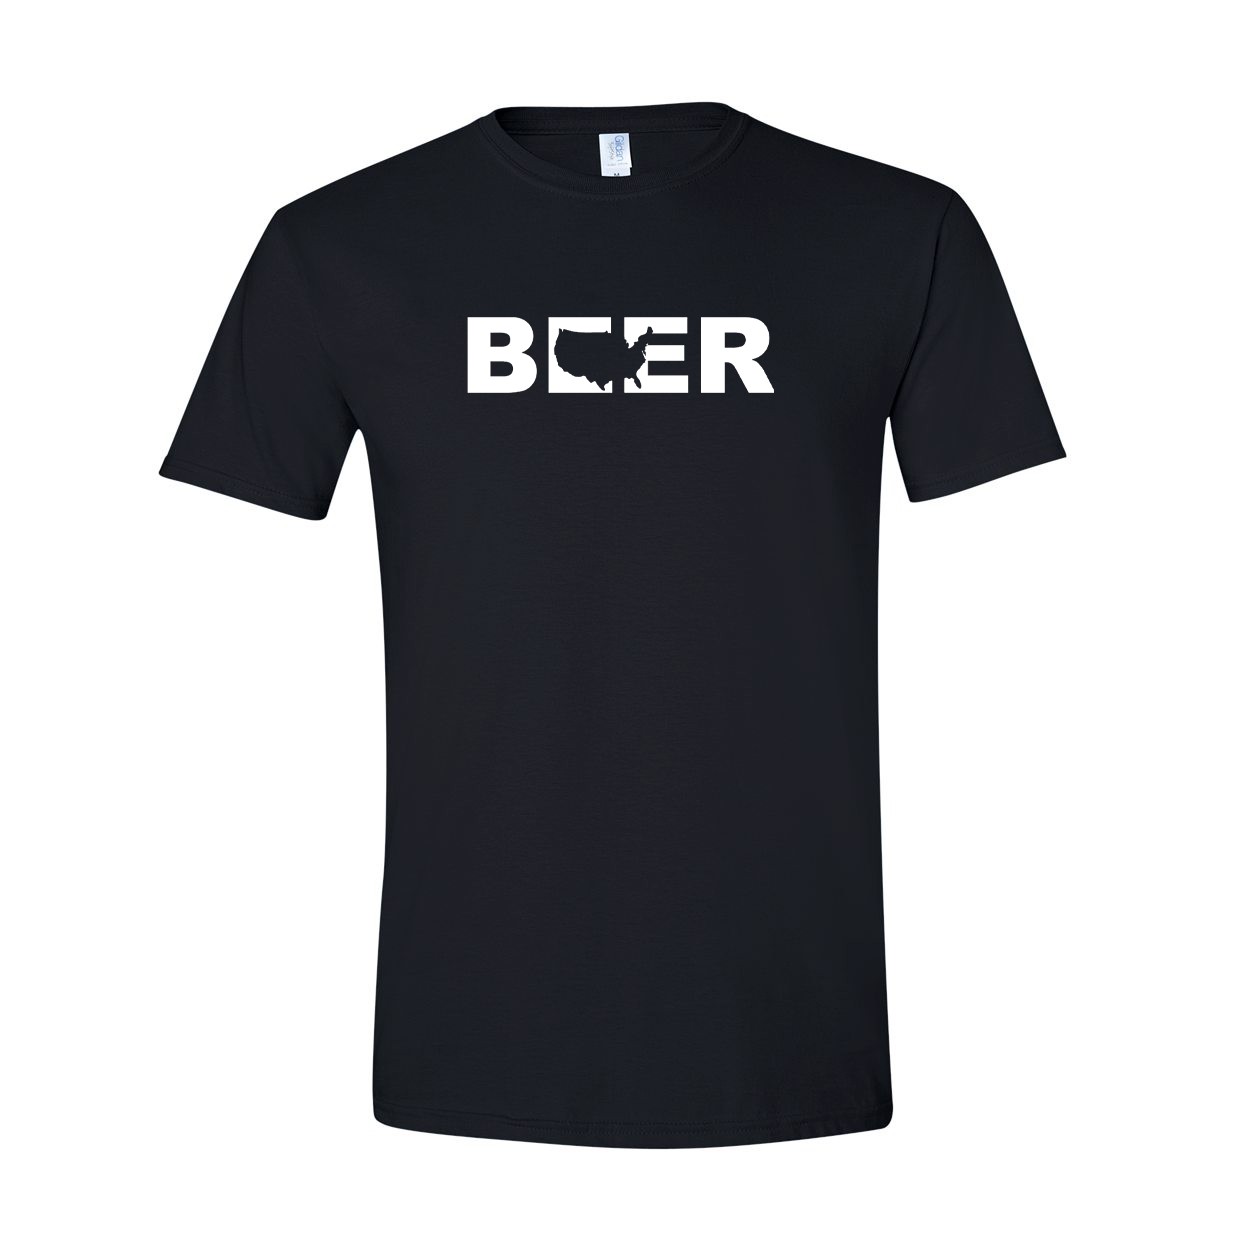 Beer United States Classic T-Shirt Black (White Logo)